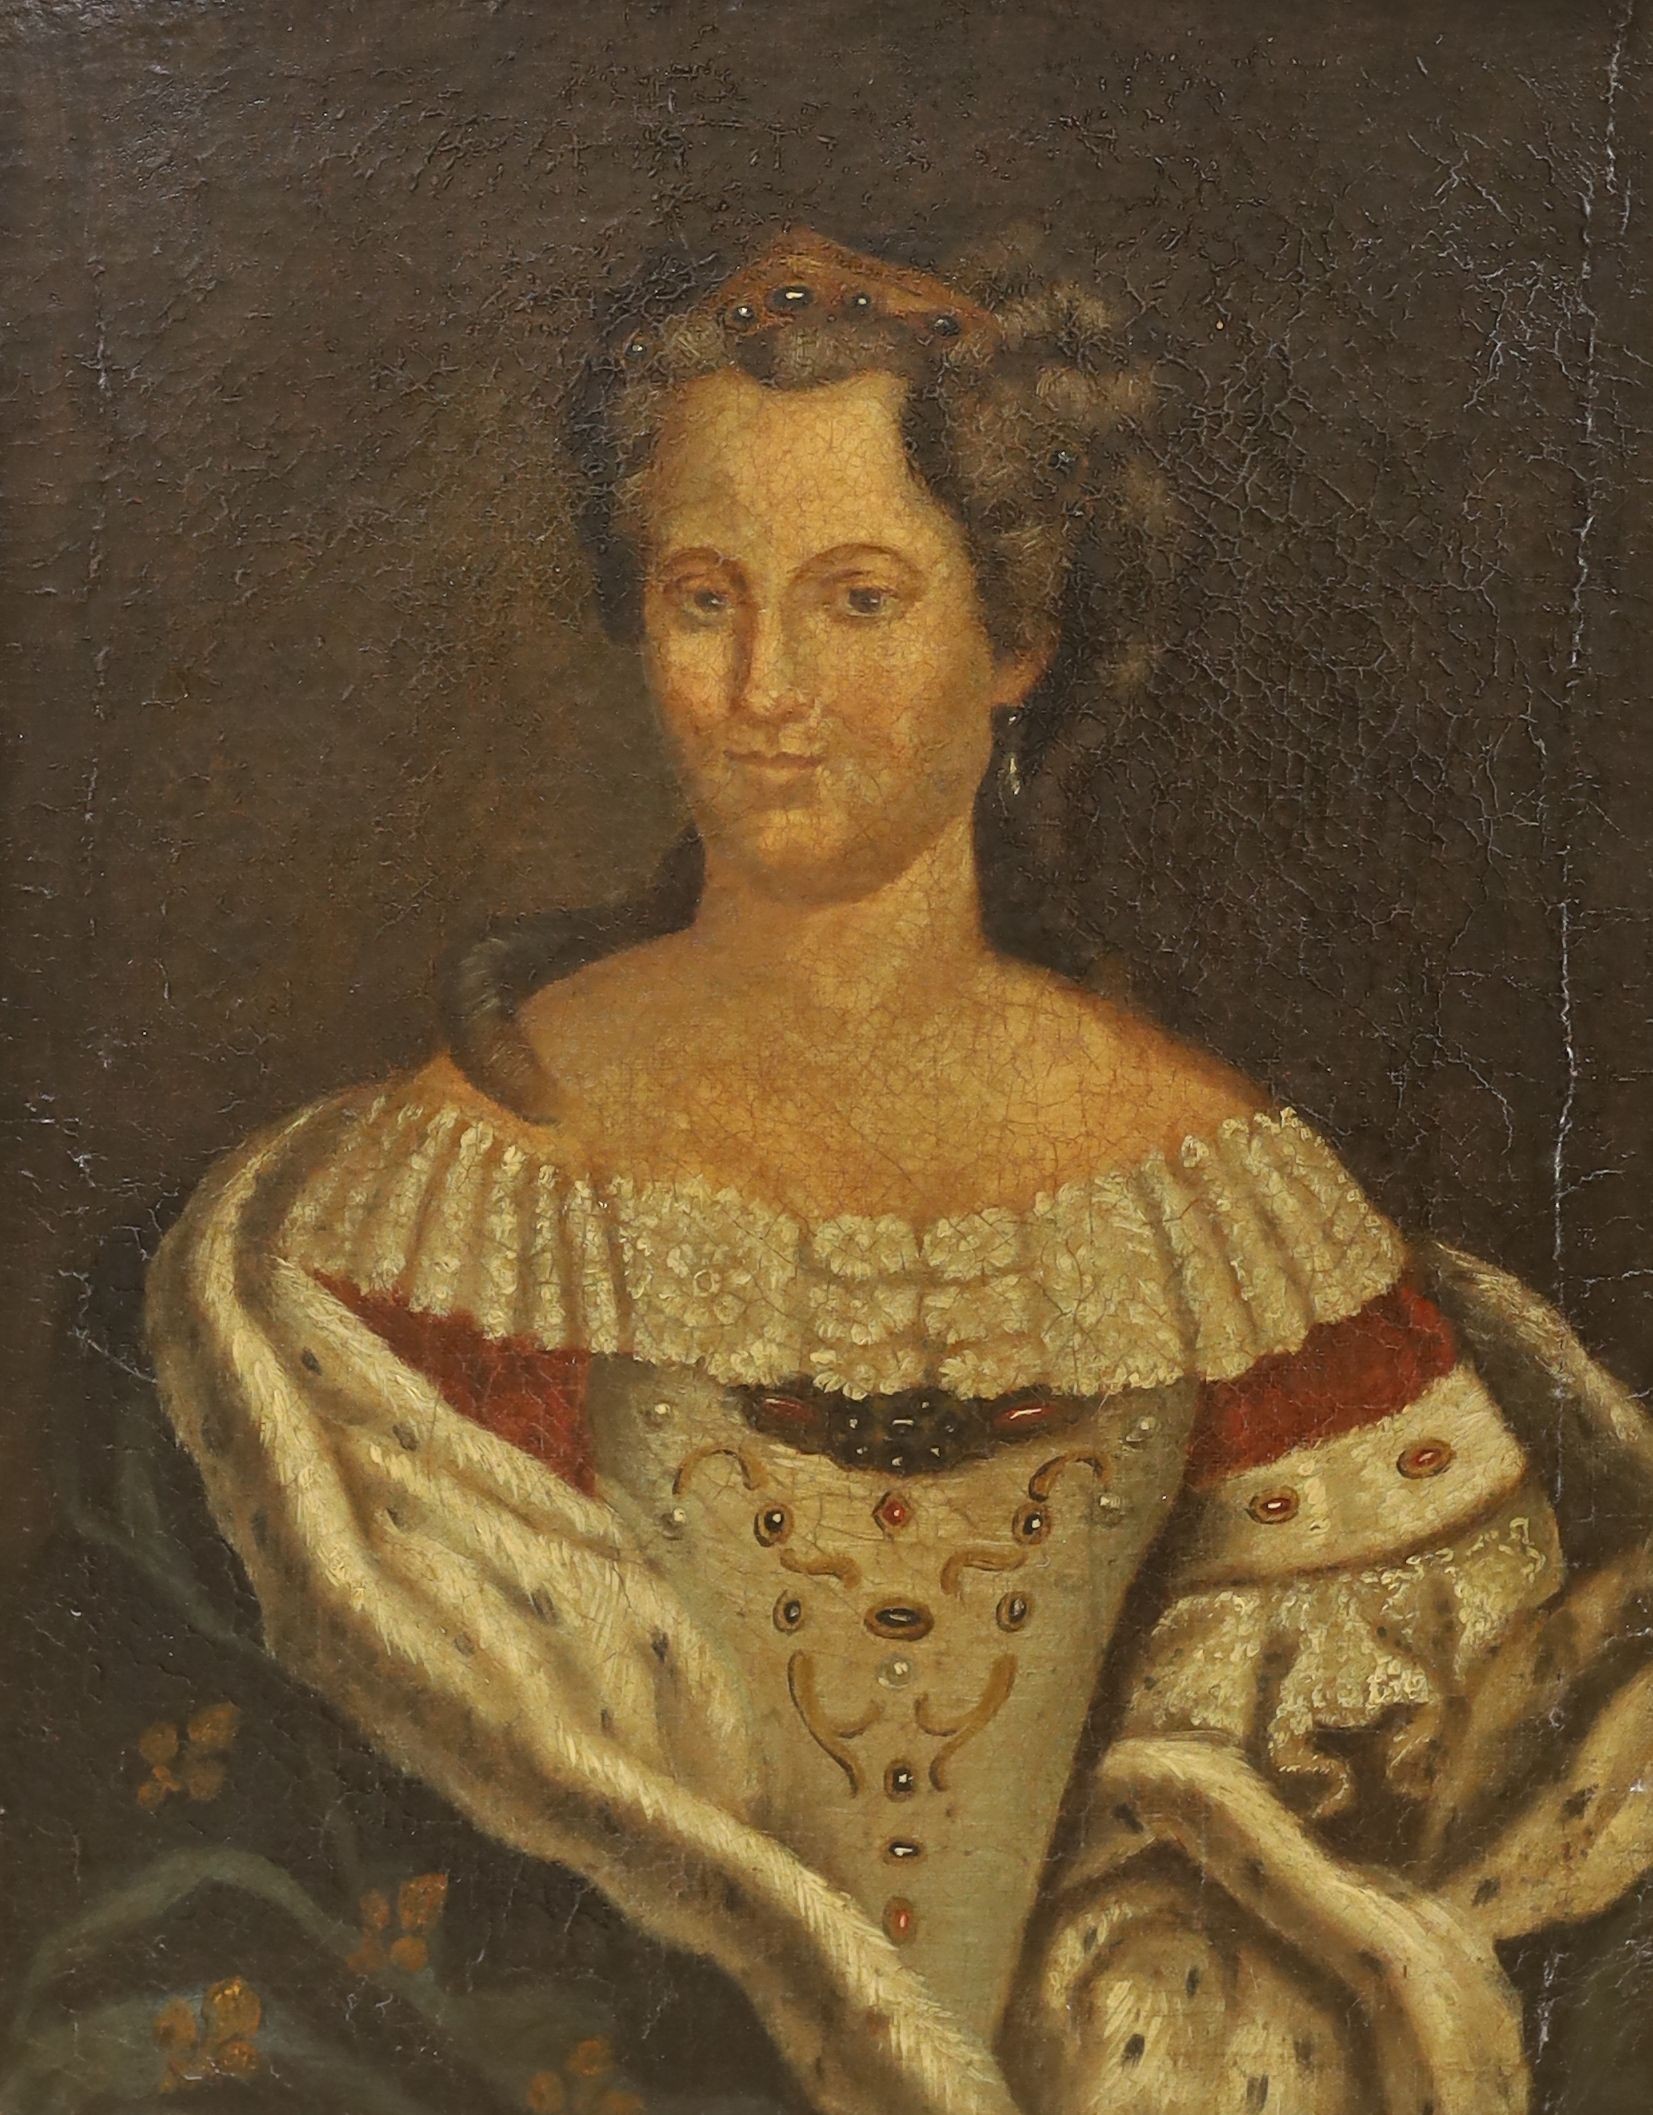 Late 18th century English School, oil on canvas, Portrait of a noblewoman, 49 x 38cm